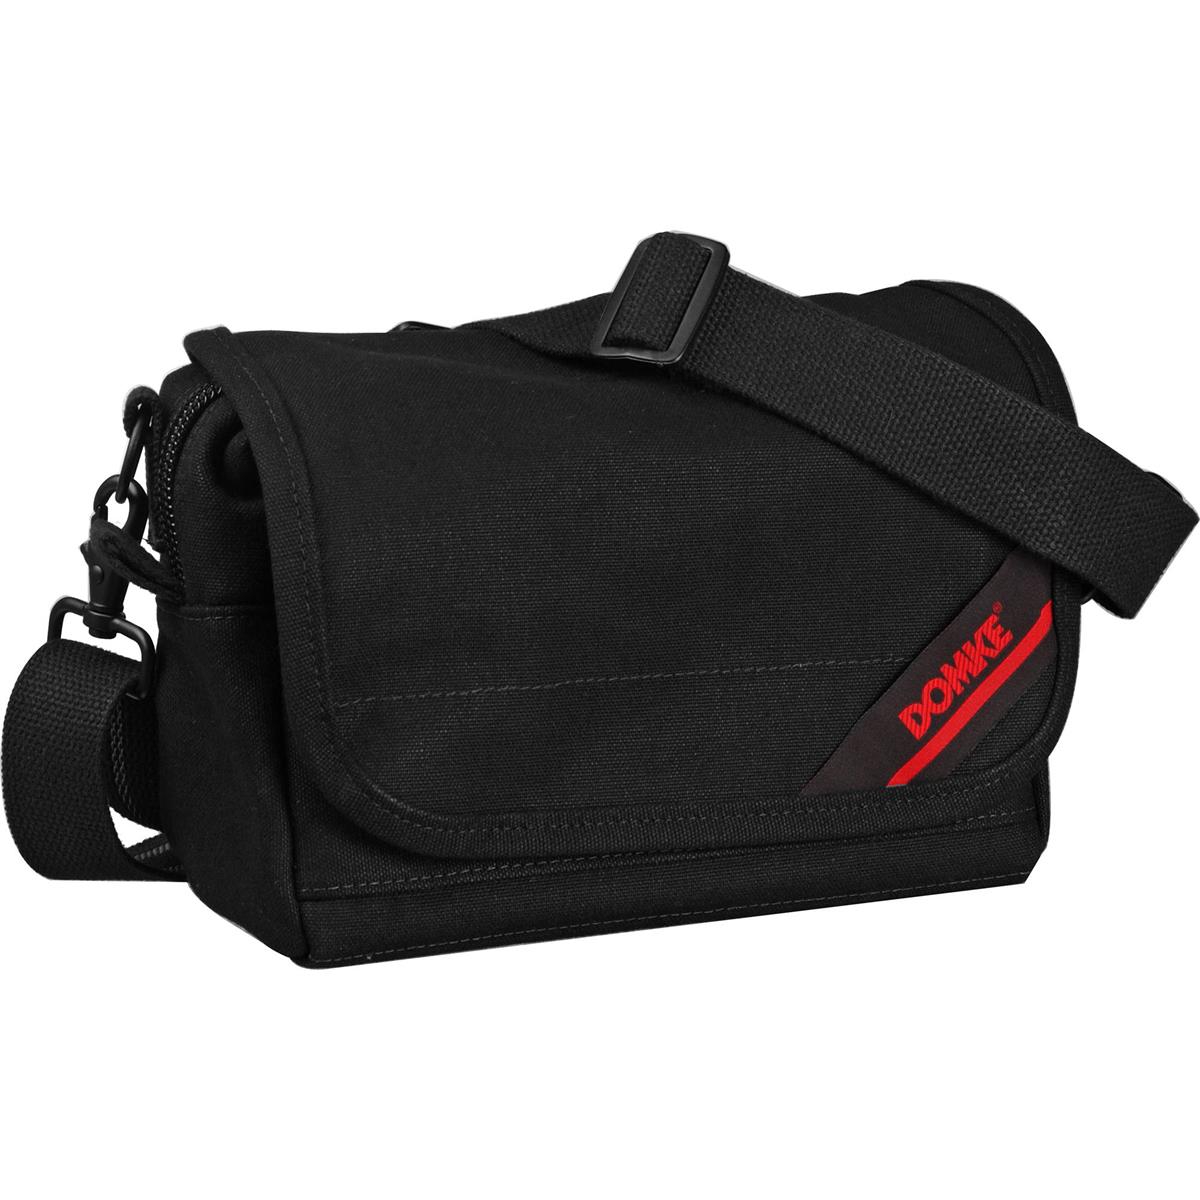 Холщовая сумка для фотоаппарата Domke F-5XB на плечо/ремень, черная #70052B